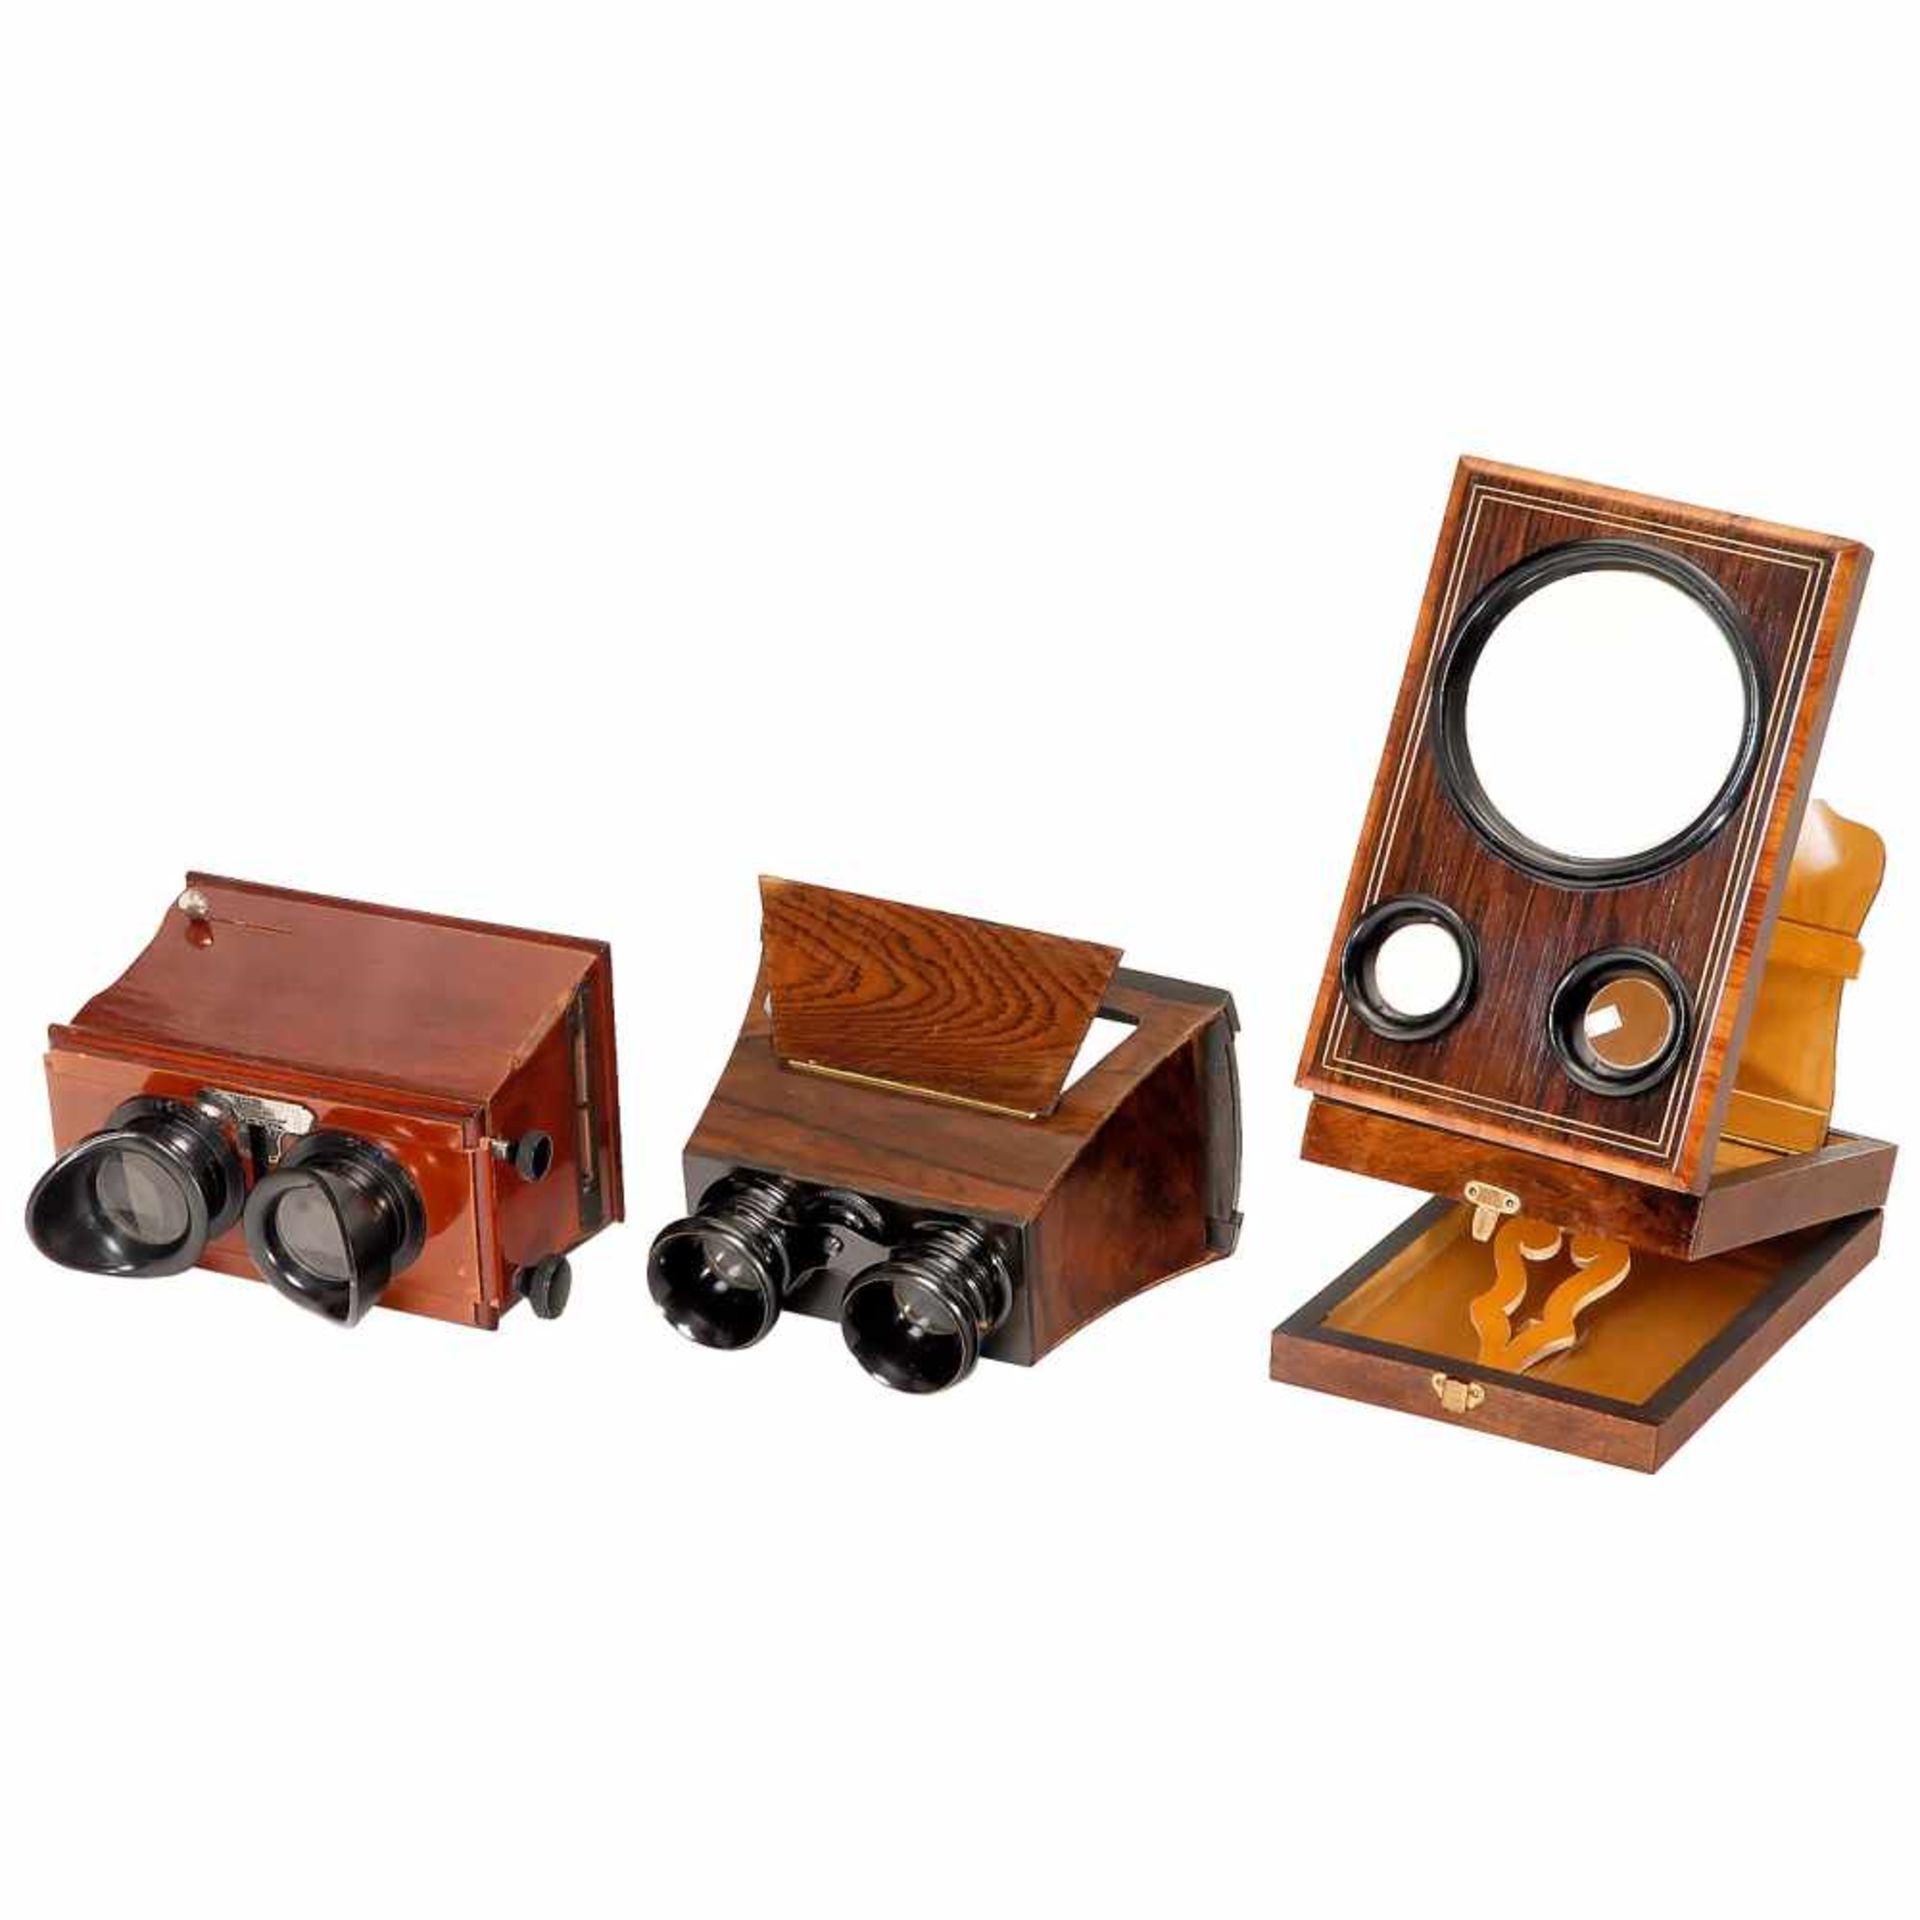 3 Stereo Viewers1) Stéréoscopes, Paris. Planox, c. 1920. For stereo slides of 6 x 13 cm, mahogany,